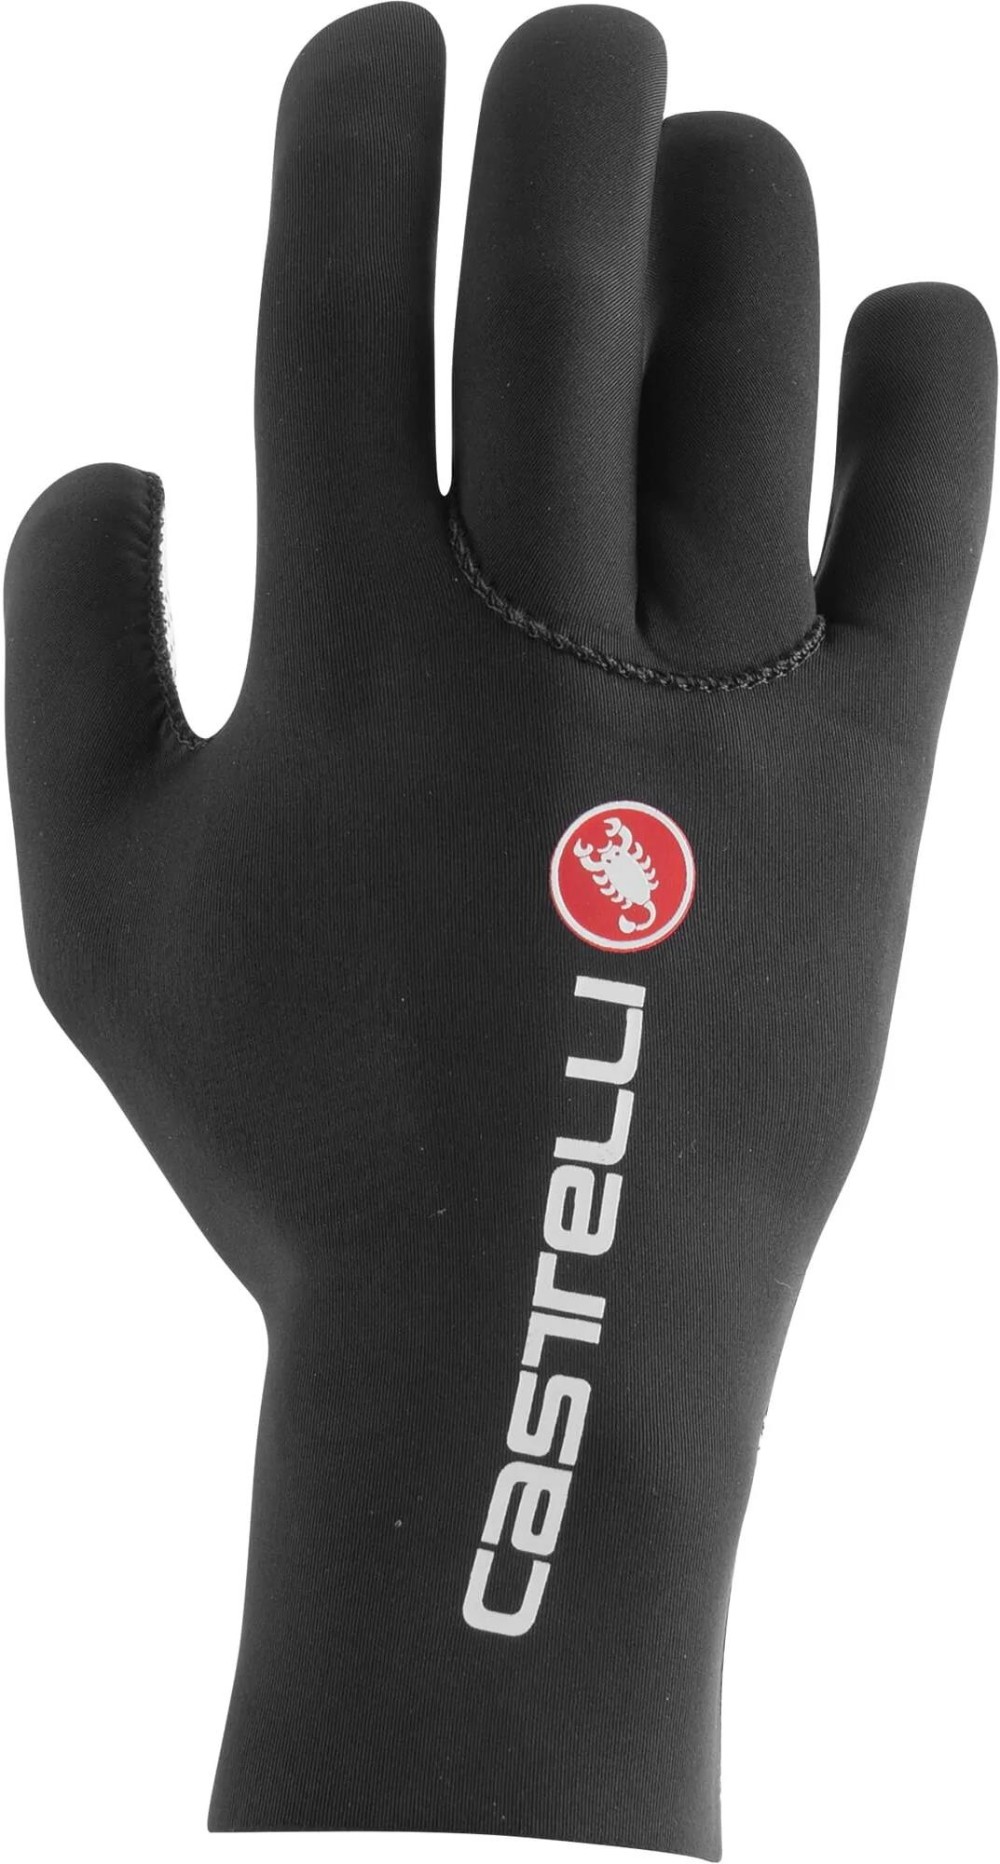 Diluvio C Long Finger Gloves image 0